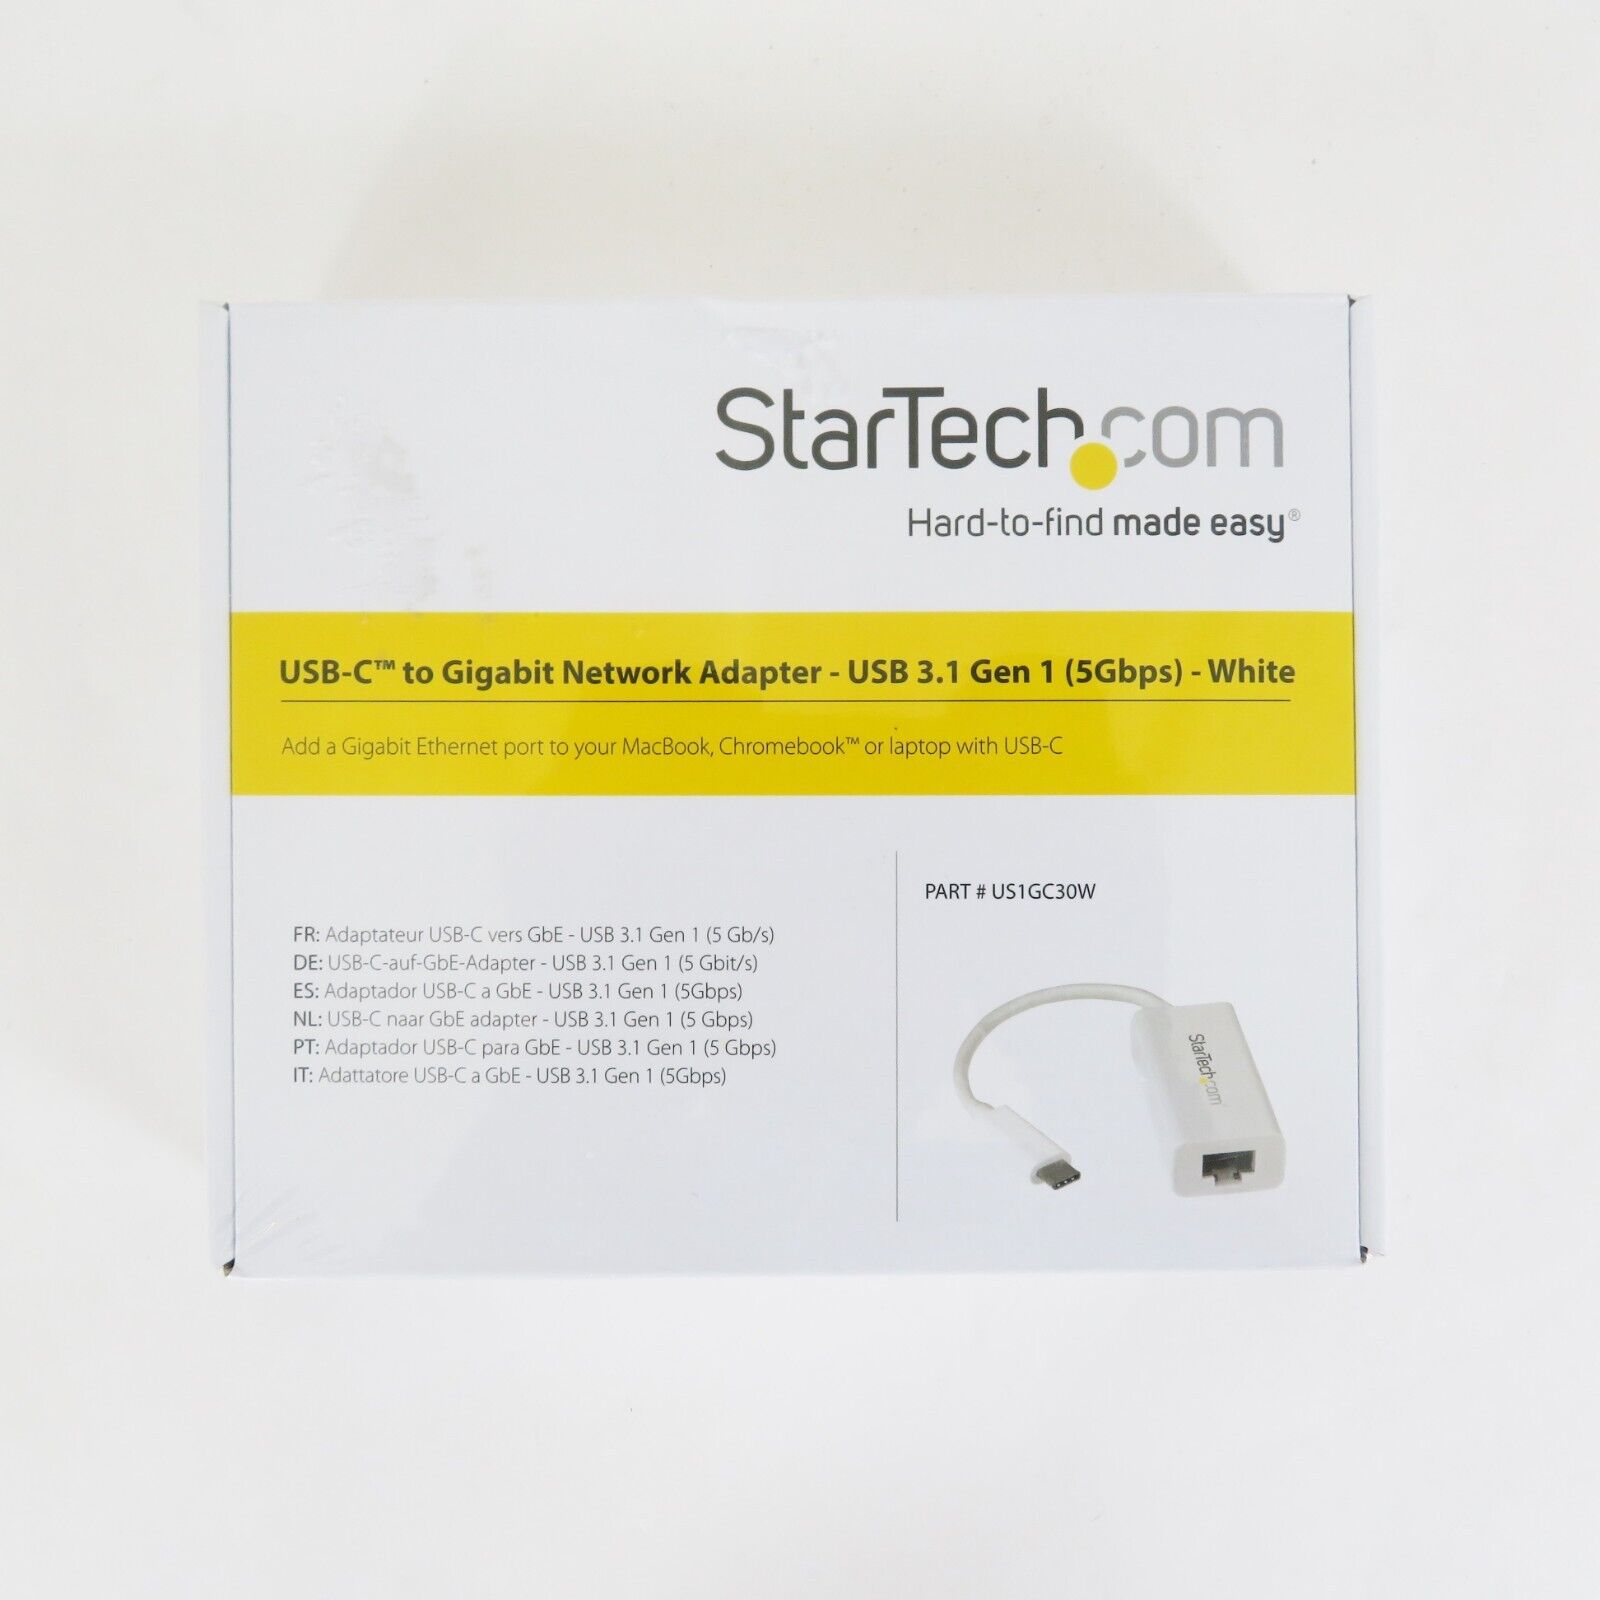 StarTech.com USB-C to Gigabit Ethernet Network Adapter US1GC30W USB 3.1 5Gbps